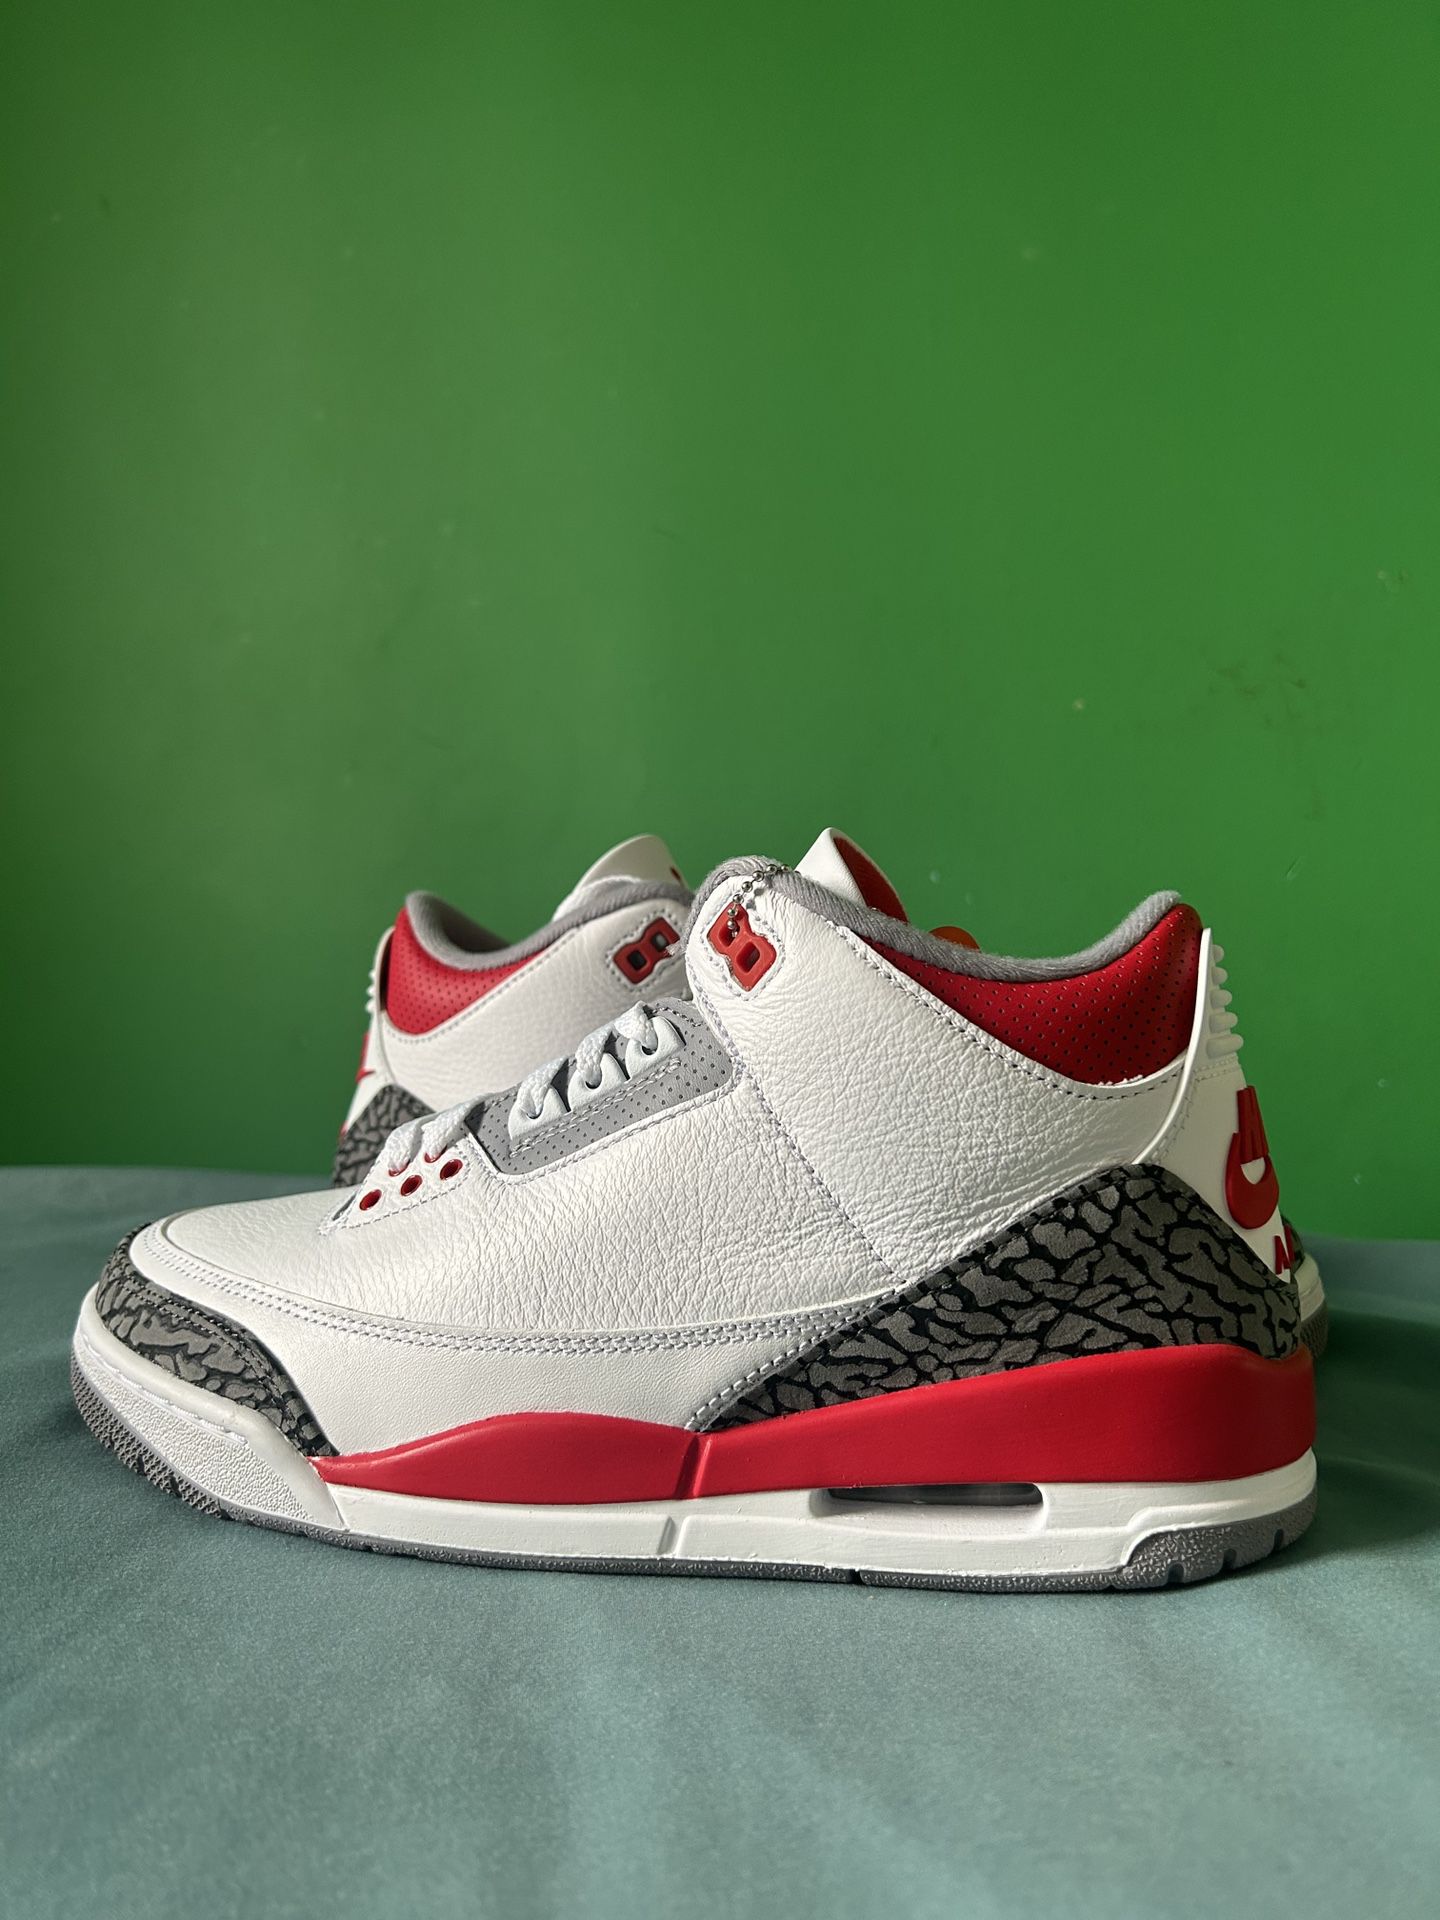 Nike Air Jordan 3 Fire Red Size 8.5